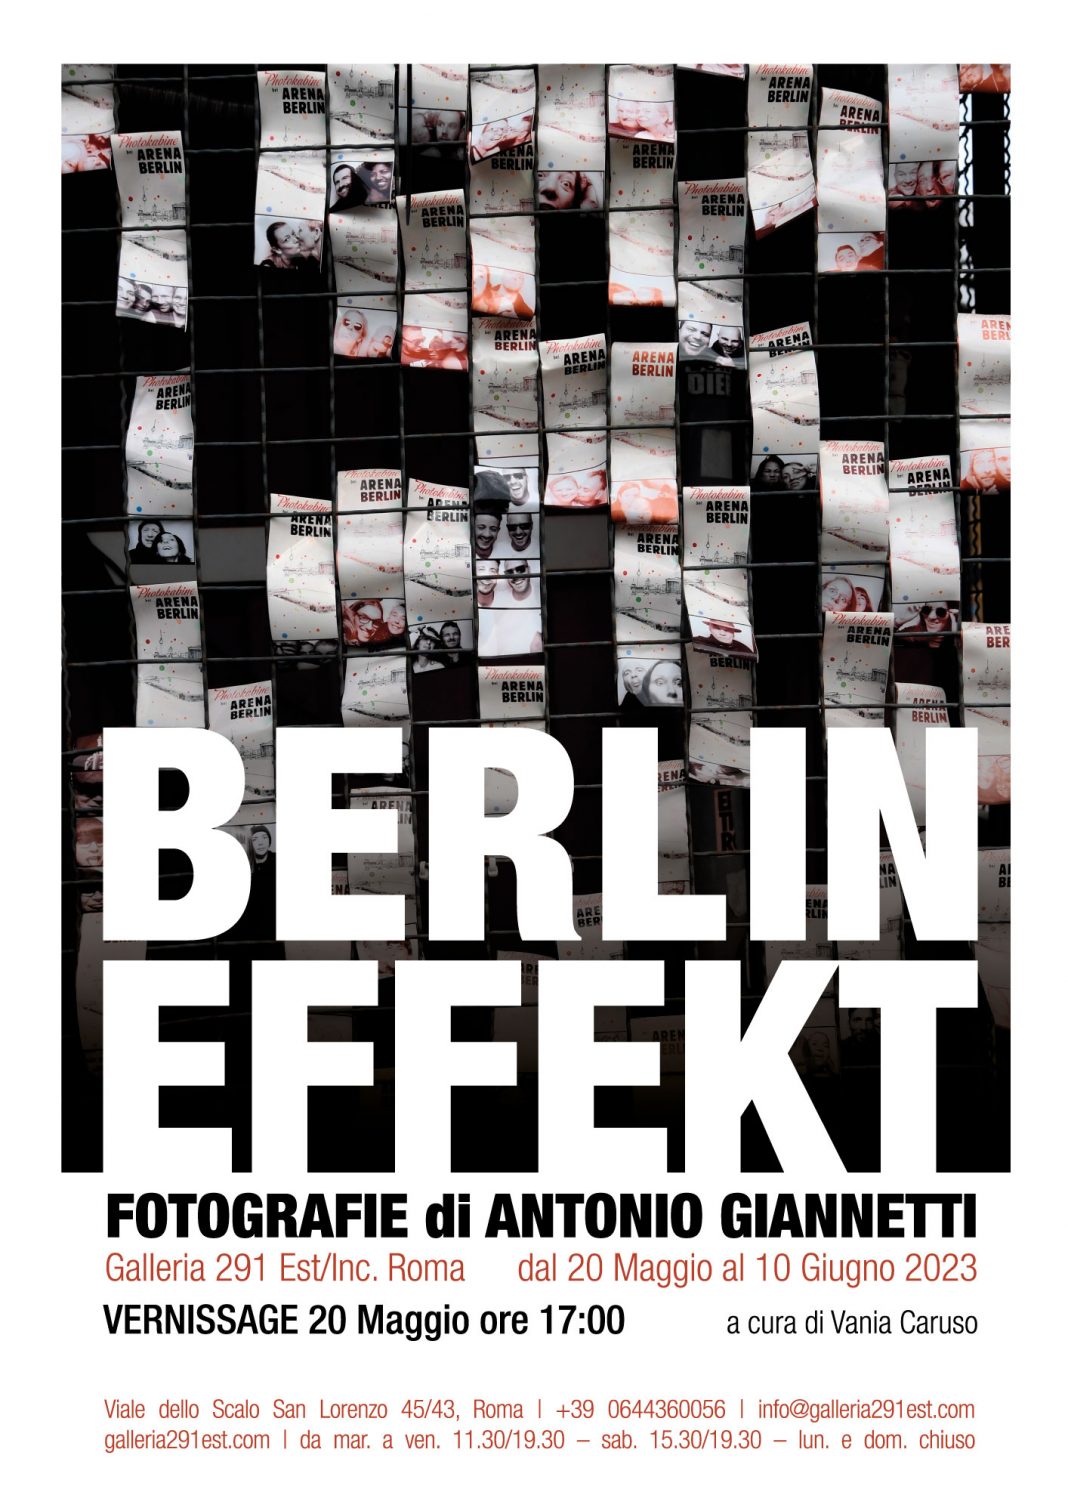 Antonio Giannetti – Berlin Effekthttps://www.exibart.com/repository/media/formidable/11/img/873/Manifesto_BerilinEffekt_Giannetti_Galleria291Est_WEB-1068x1511.jpg